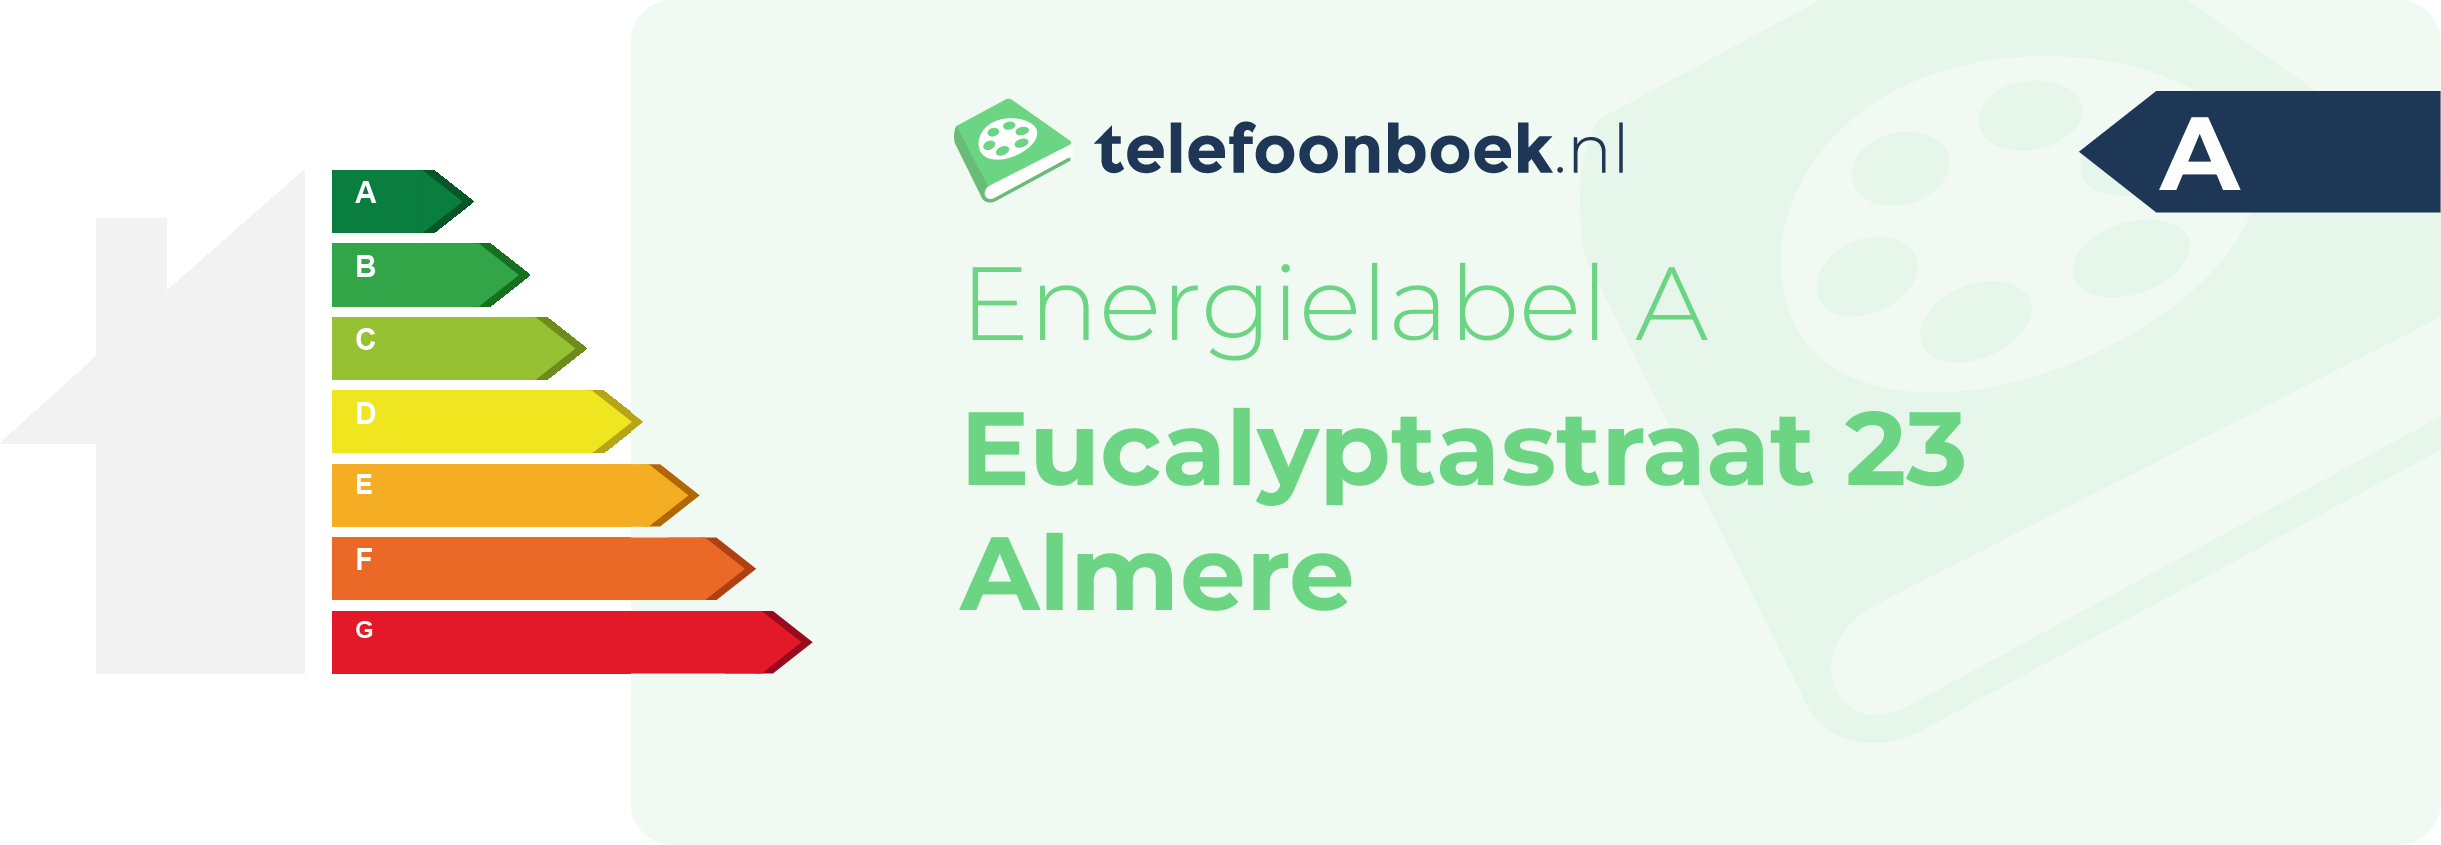 Energielabel Eucalyptastraat 23 Almere